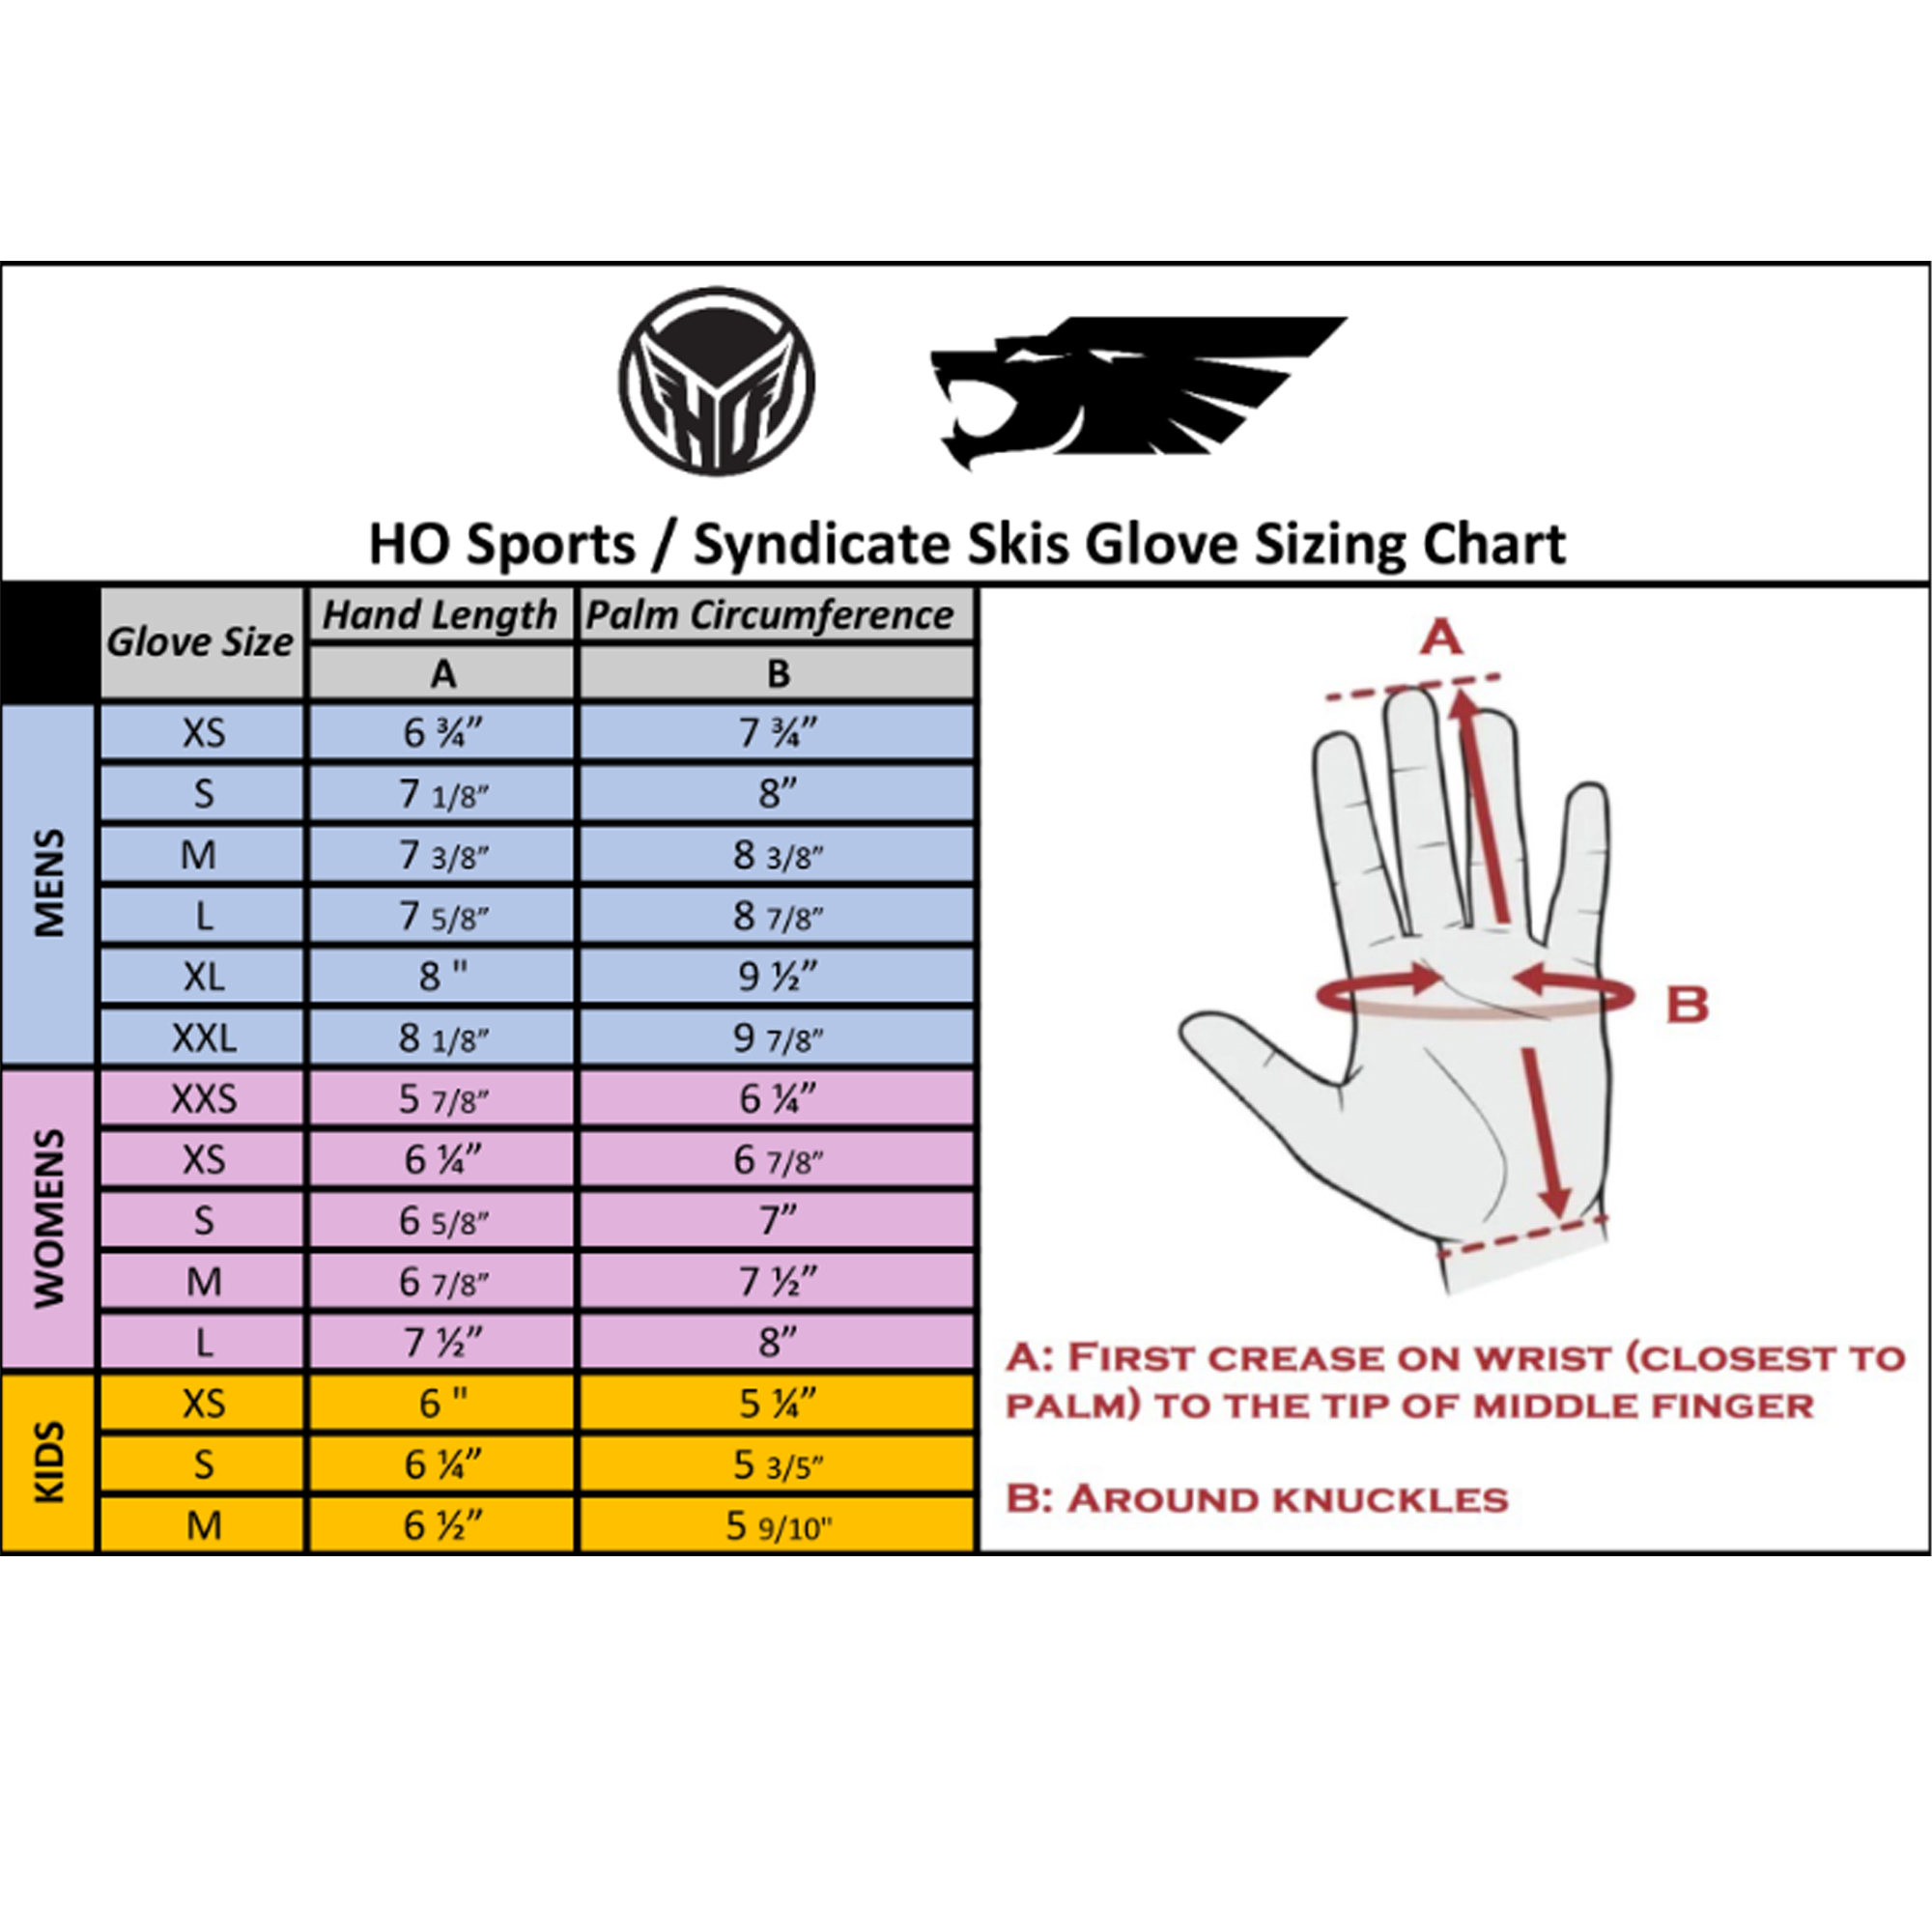 HO Sports Glove Chart (Image) 0 Tabla de Tallas